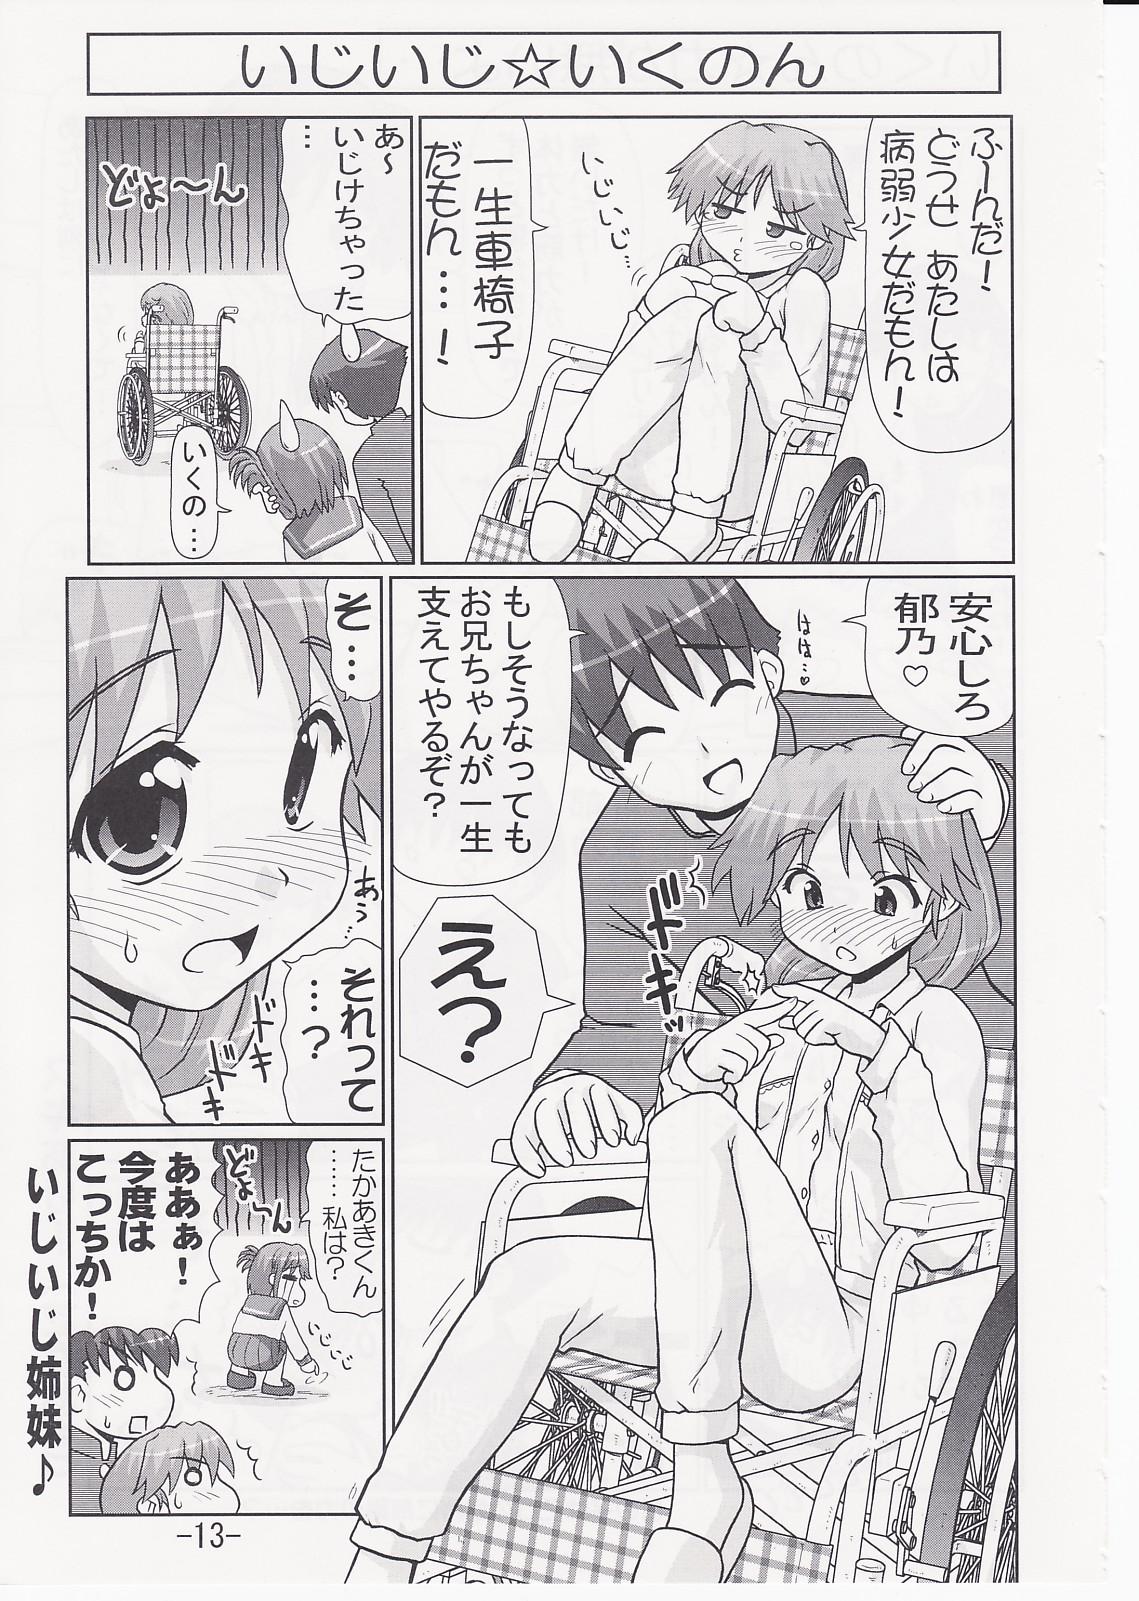 Jockstrap Ikunon Manga 2 - Toheart2 Tributo - Page 12